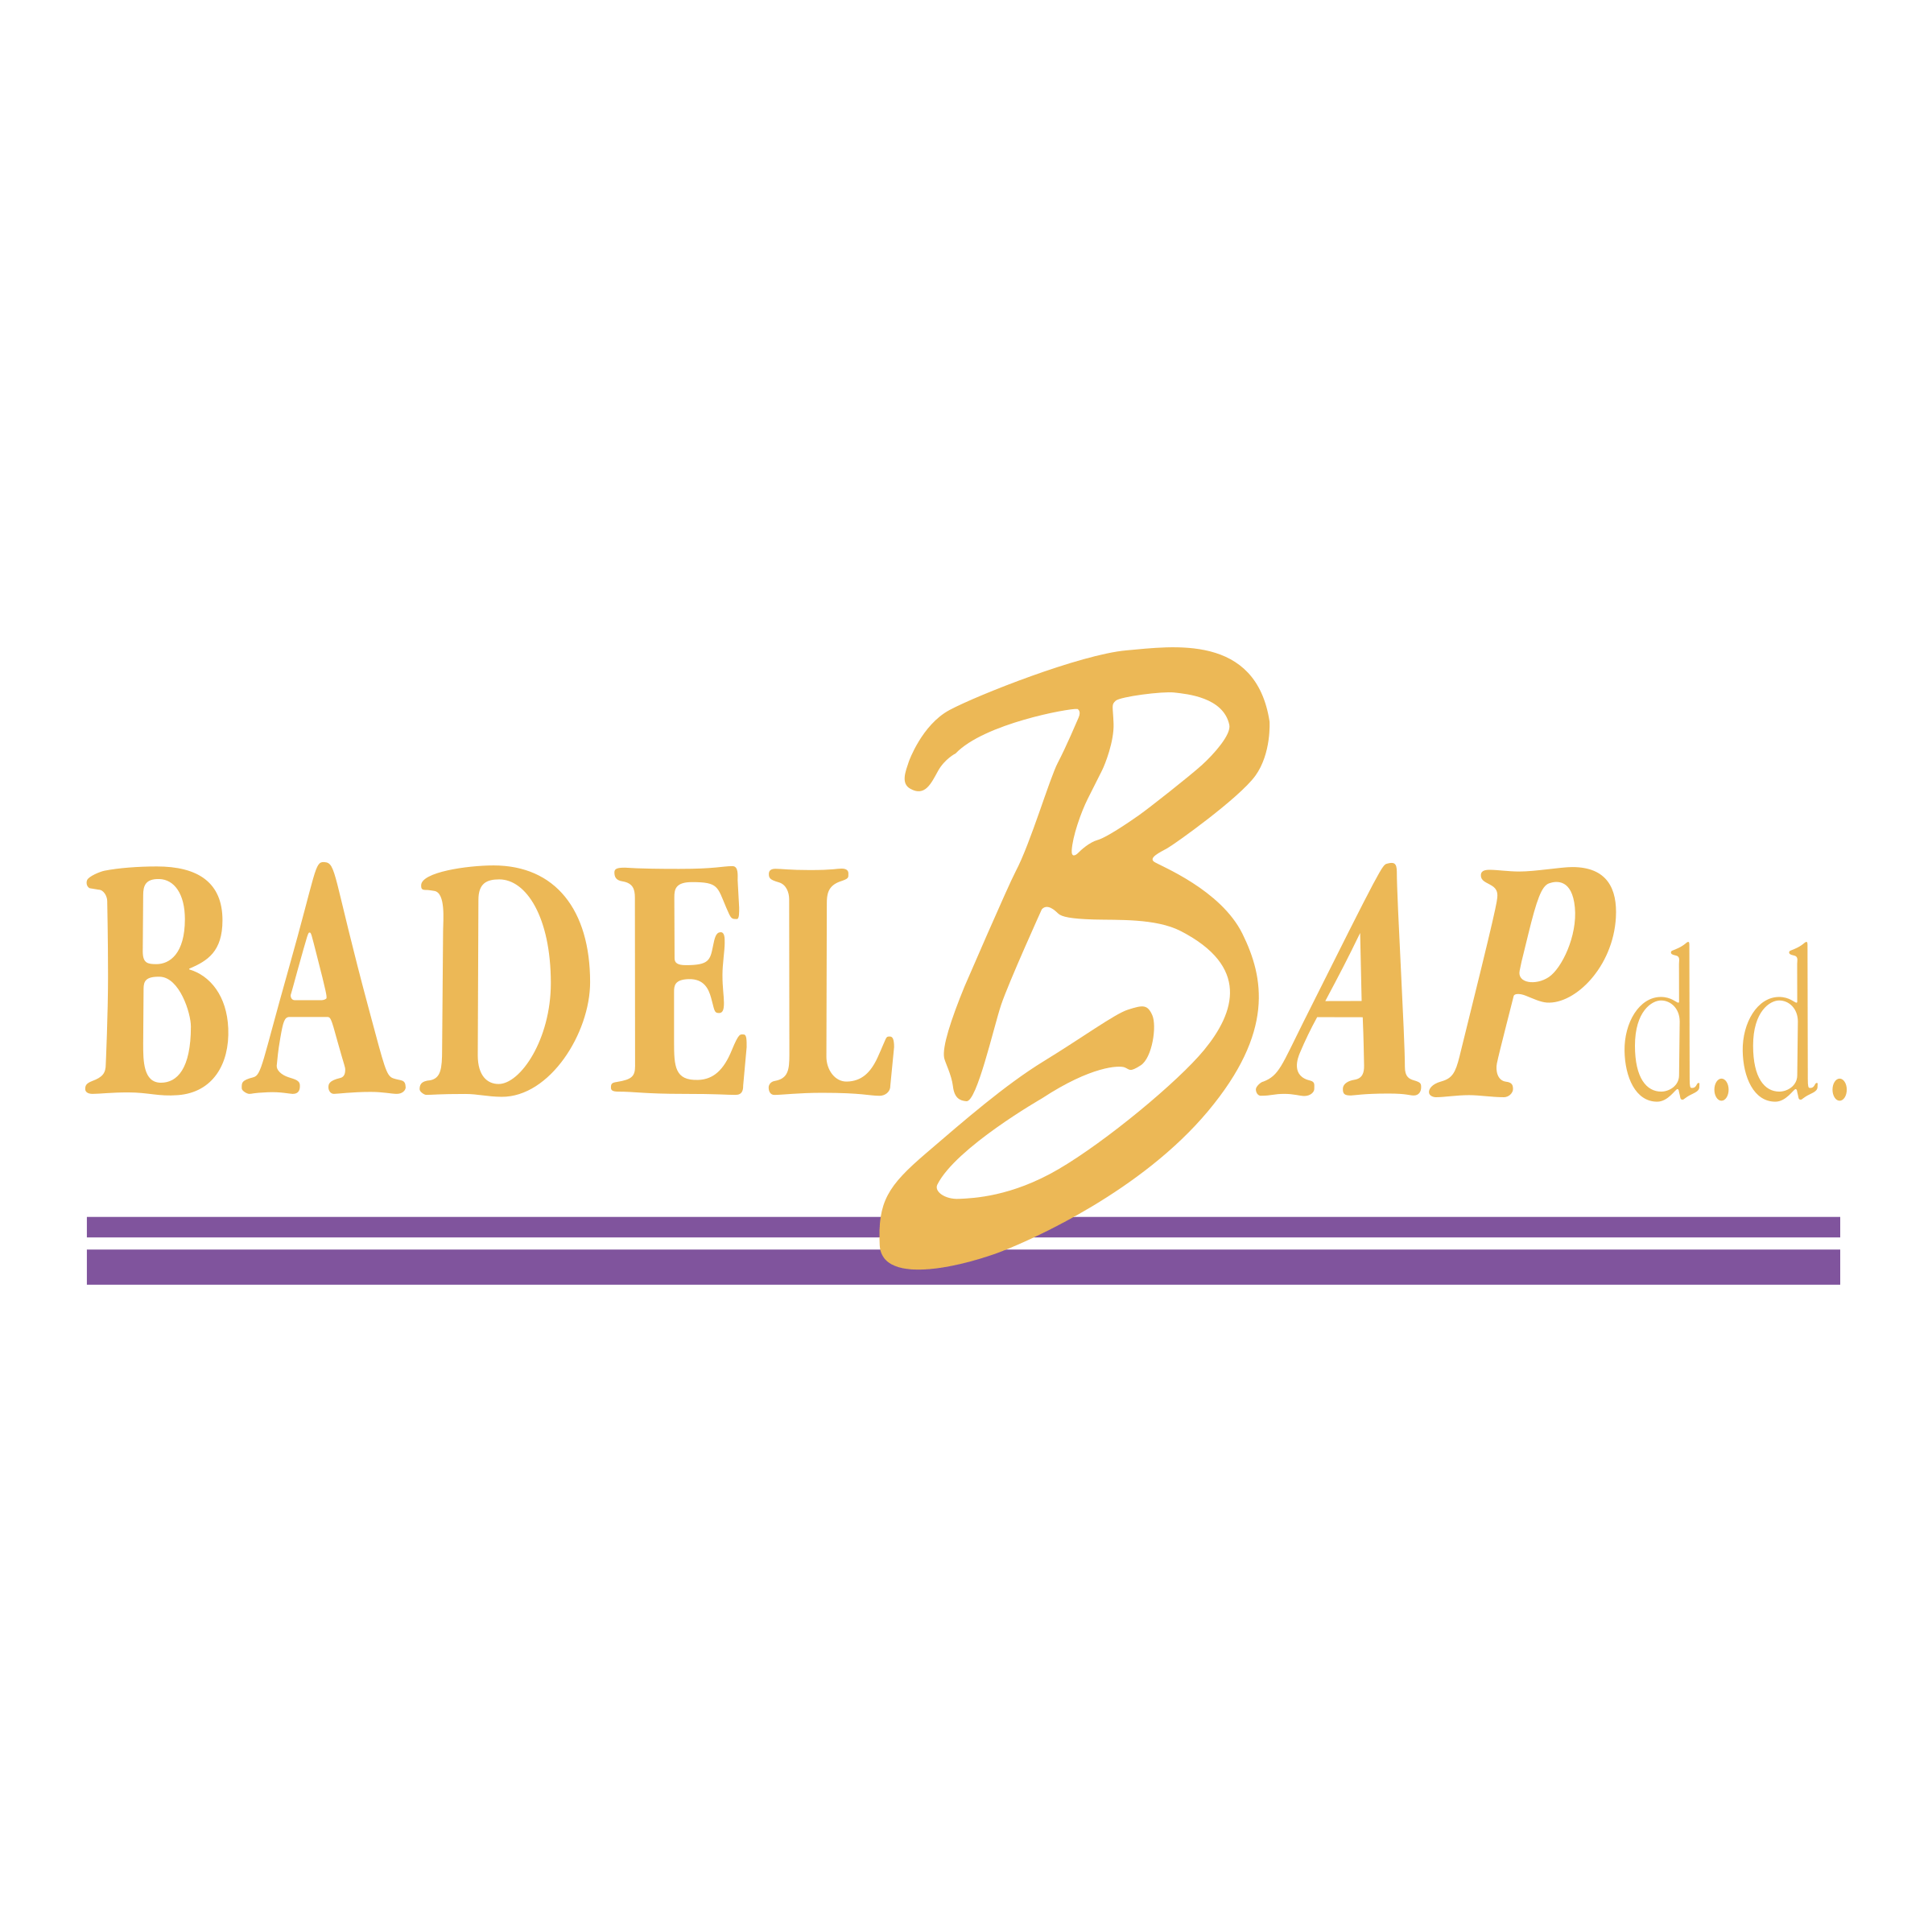 Bap Logo - Badel BAP Logo PNG Transparent & SVG Vector